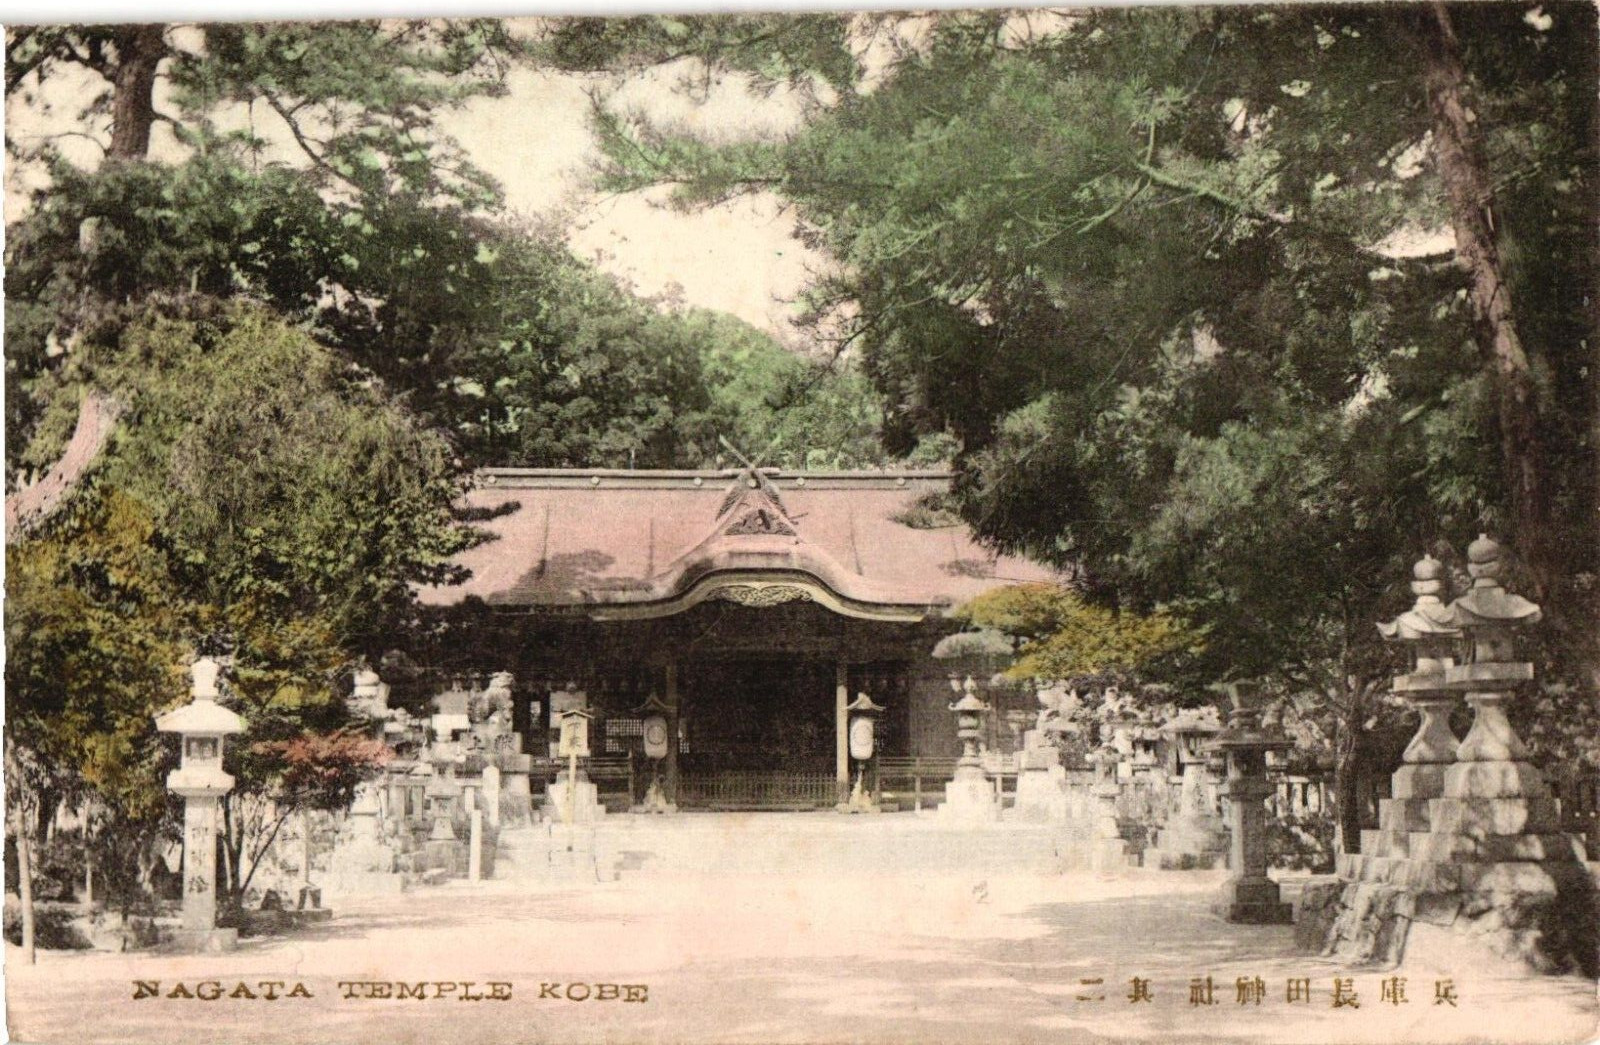 Nagata Temple Kobe Japan Antique Early 1900s Pre War Postcard Unposted